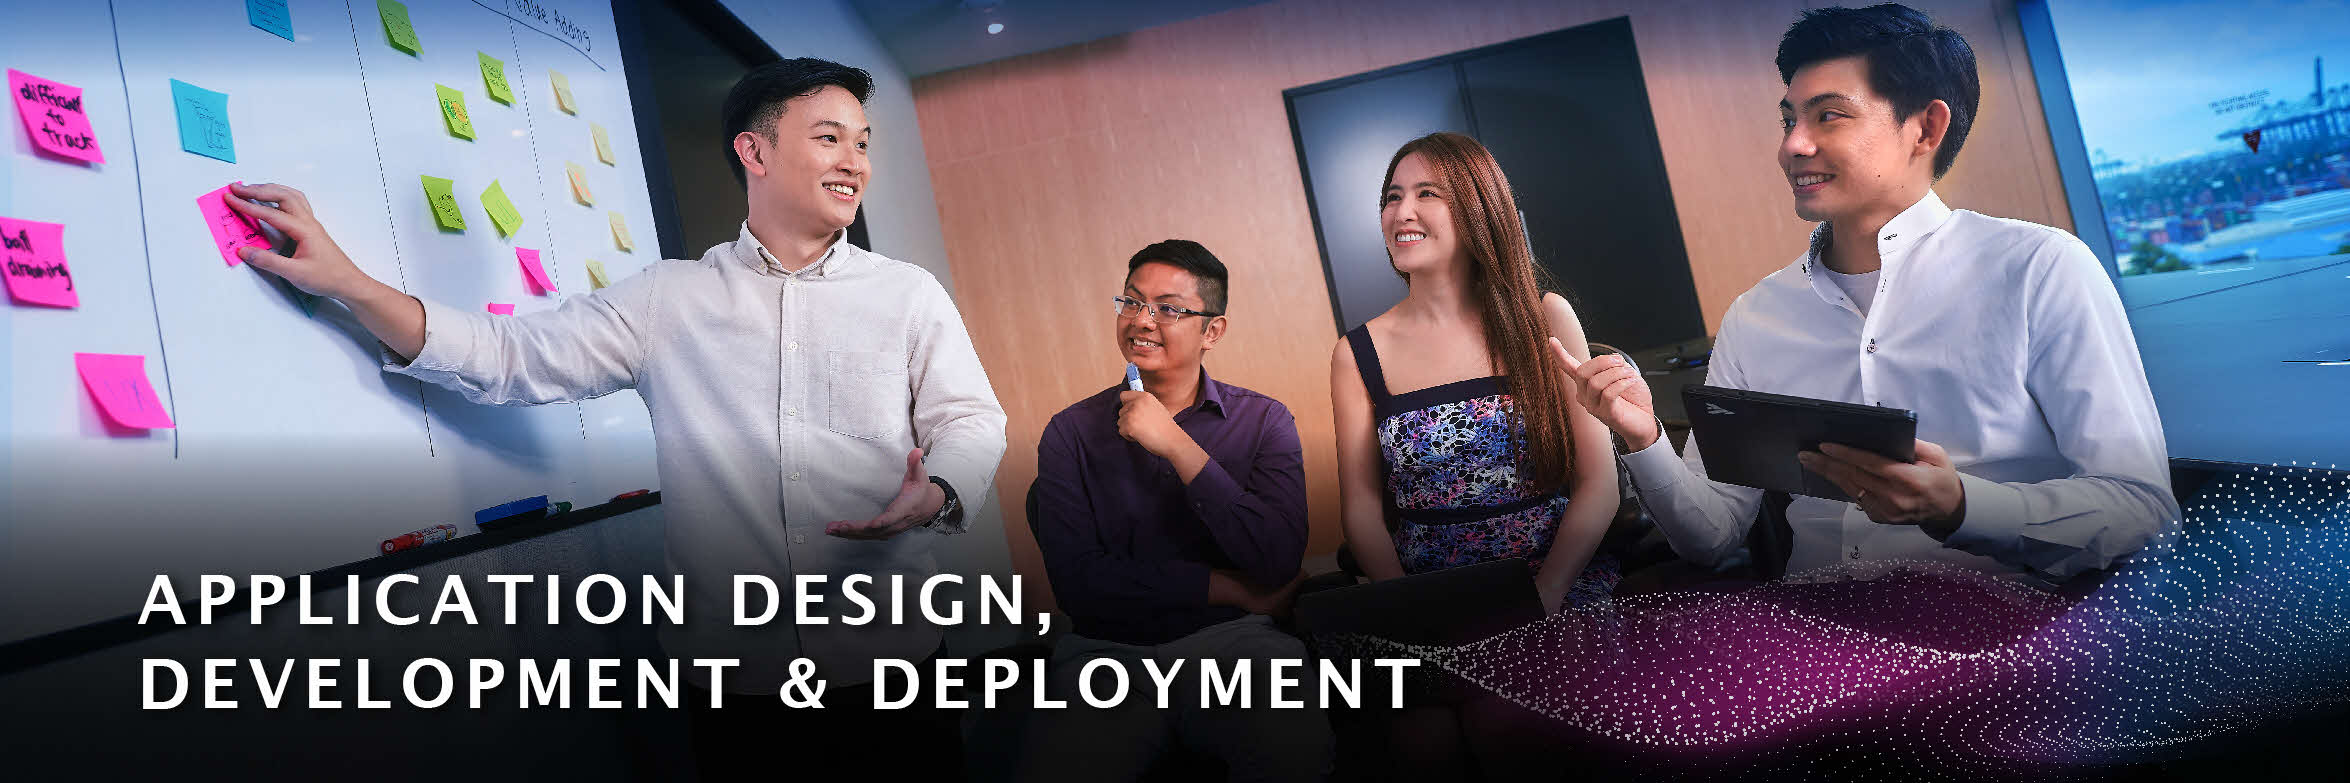 GovTech capability centre for Application Design, Development and Deployment